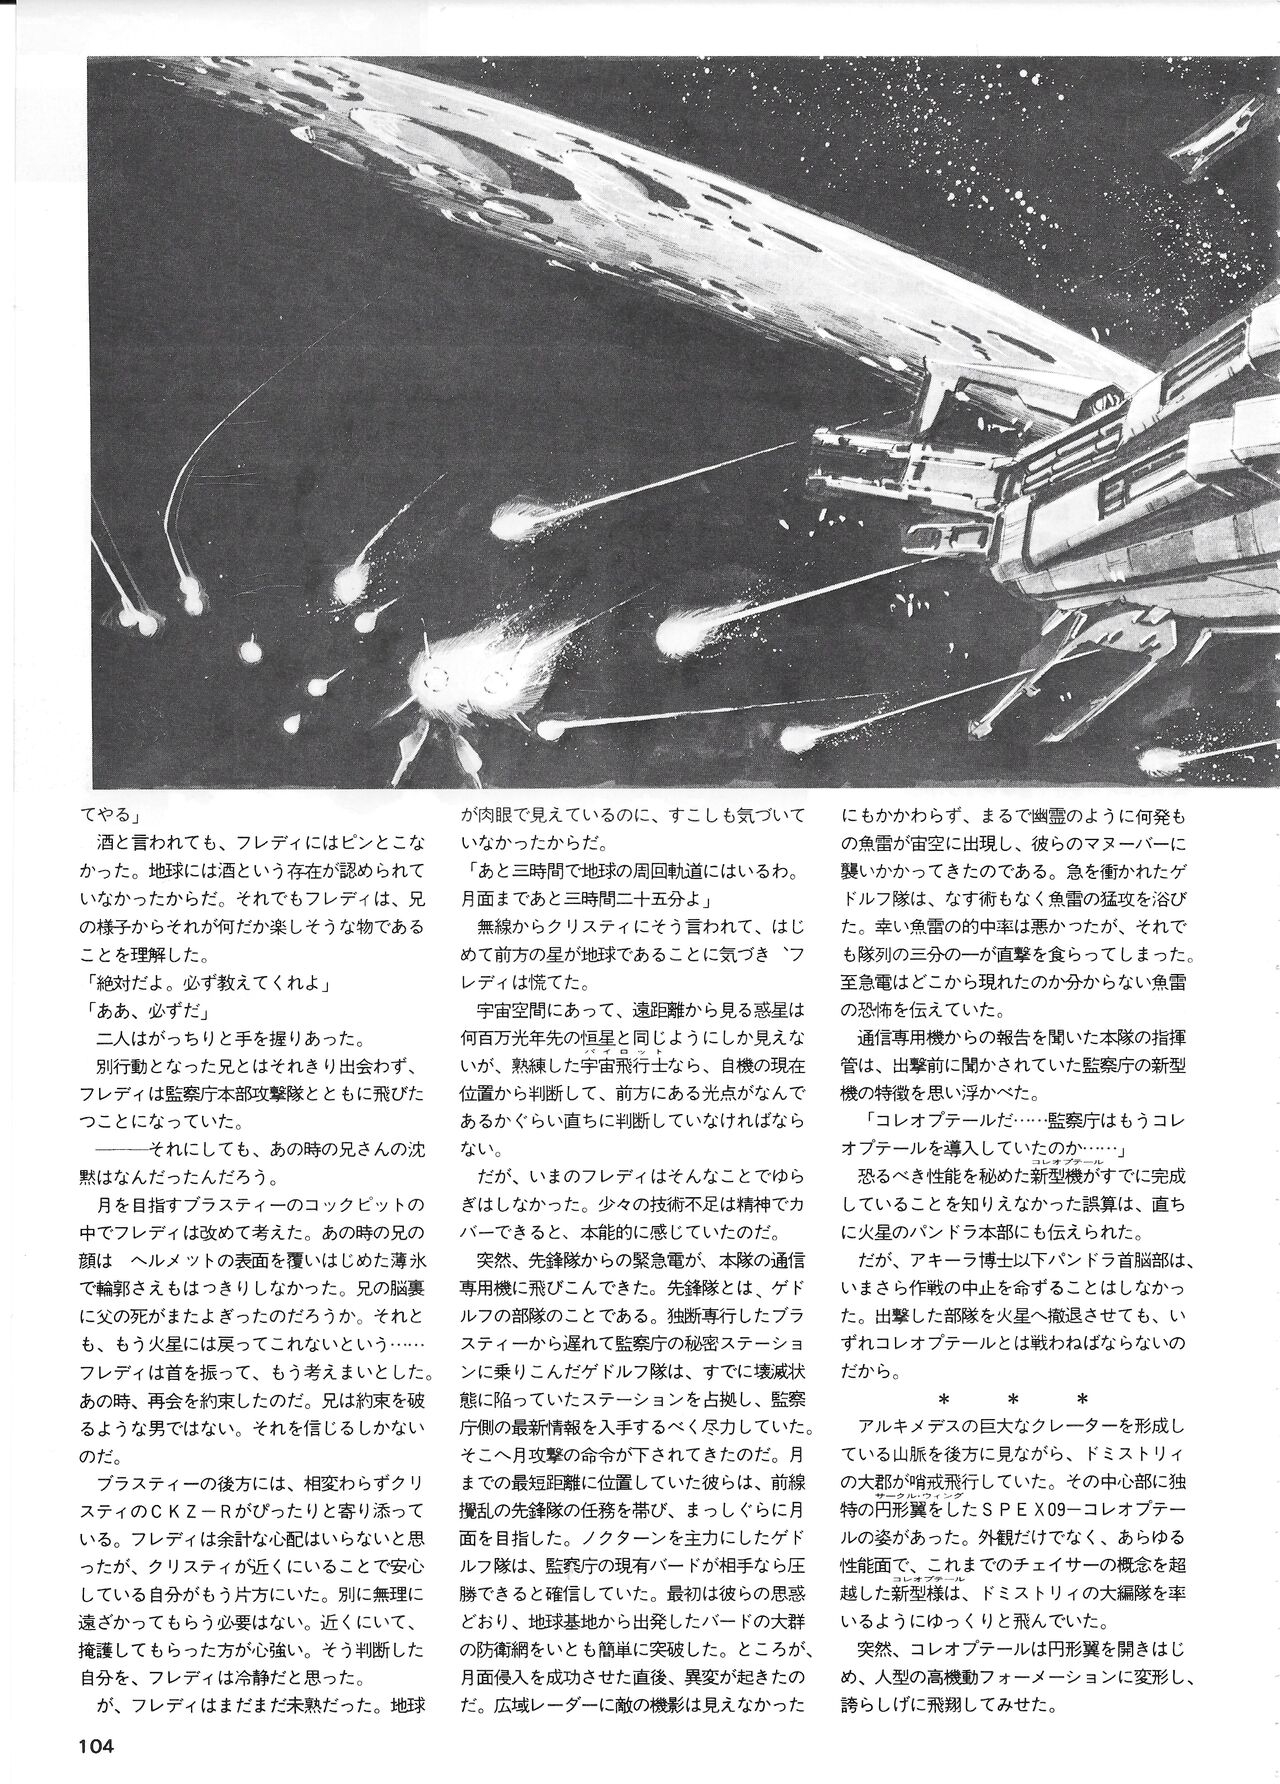 Hobby Japan Magazine 1988 Issue No.224 103